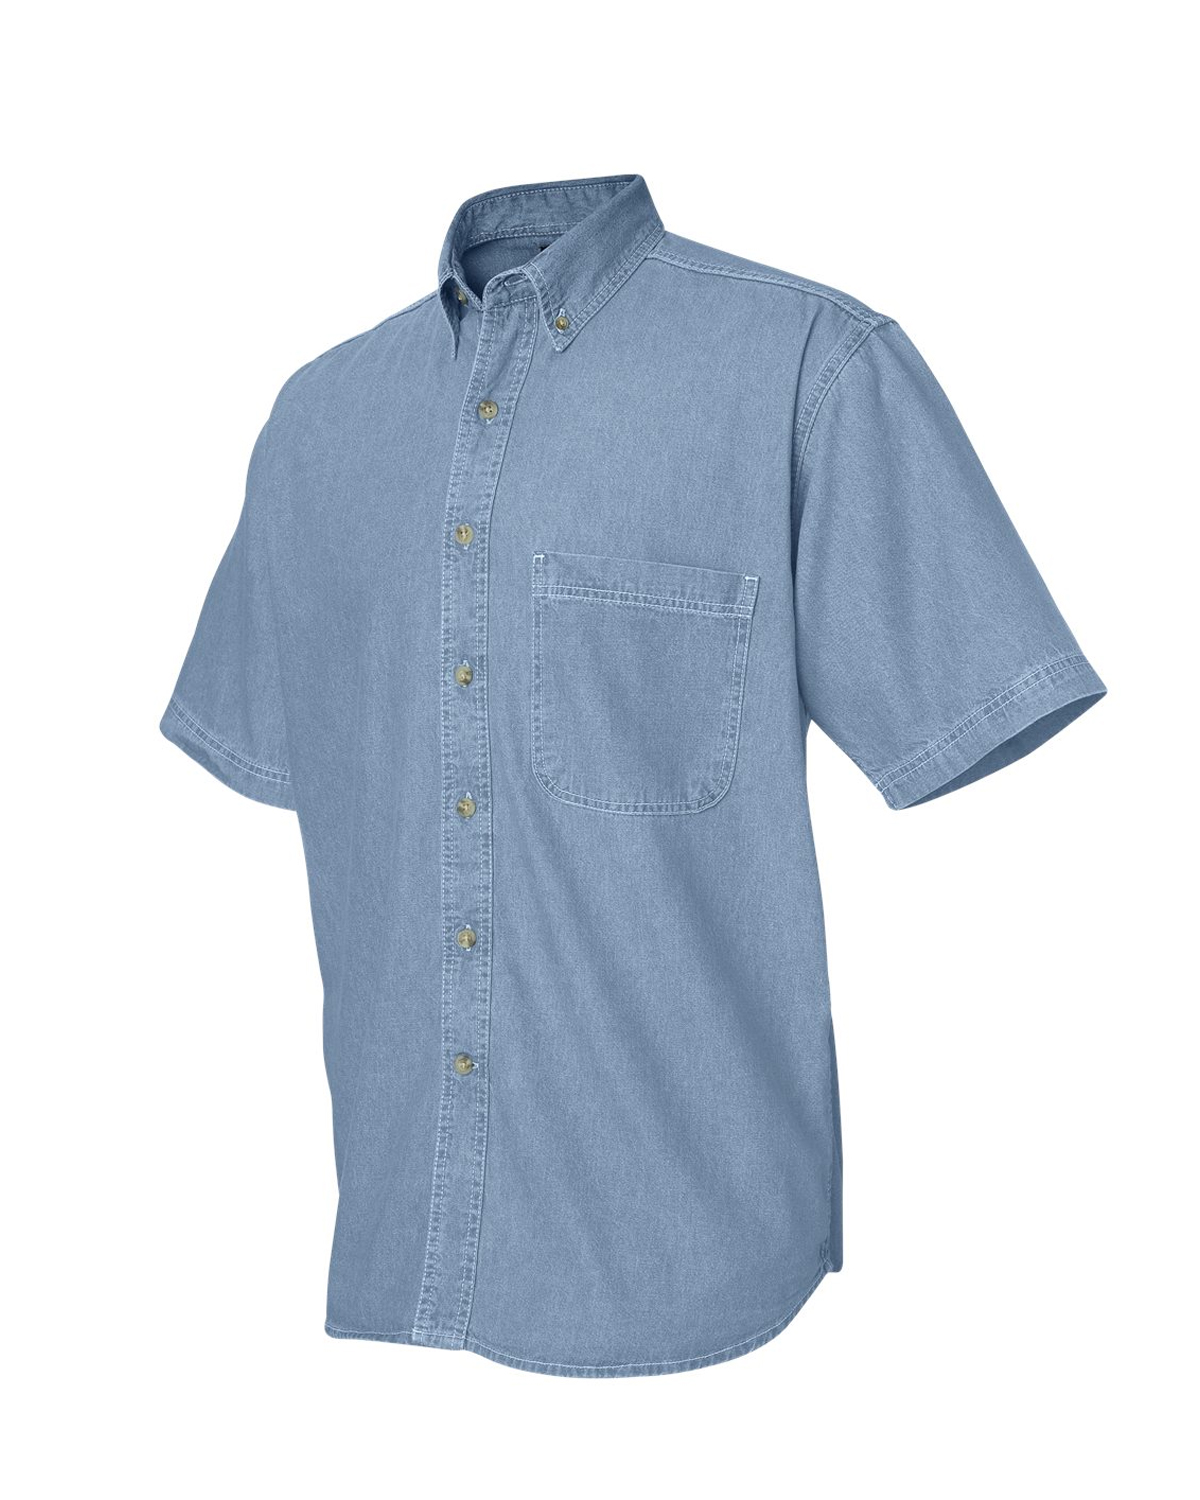 'Sierra Pacific 0211 Short Sleeve Denim Shirt'